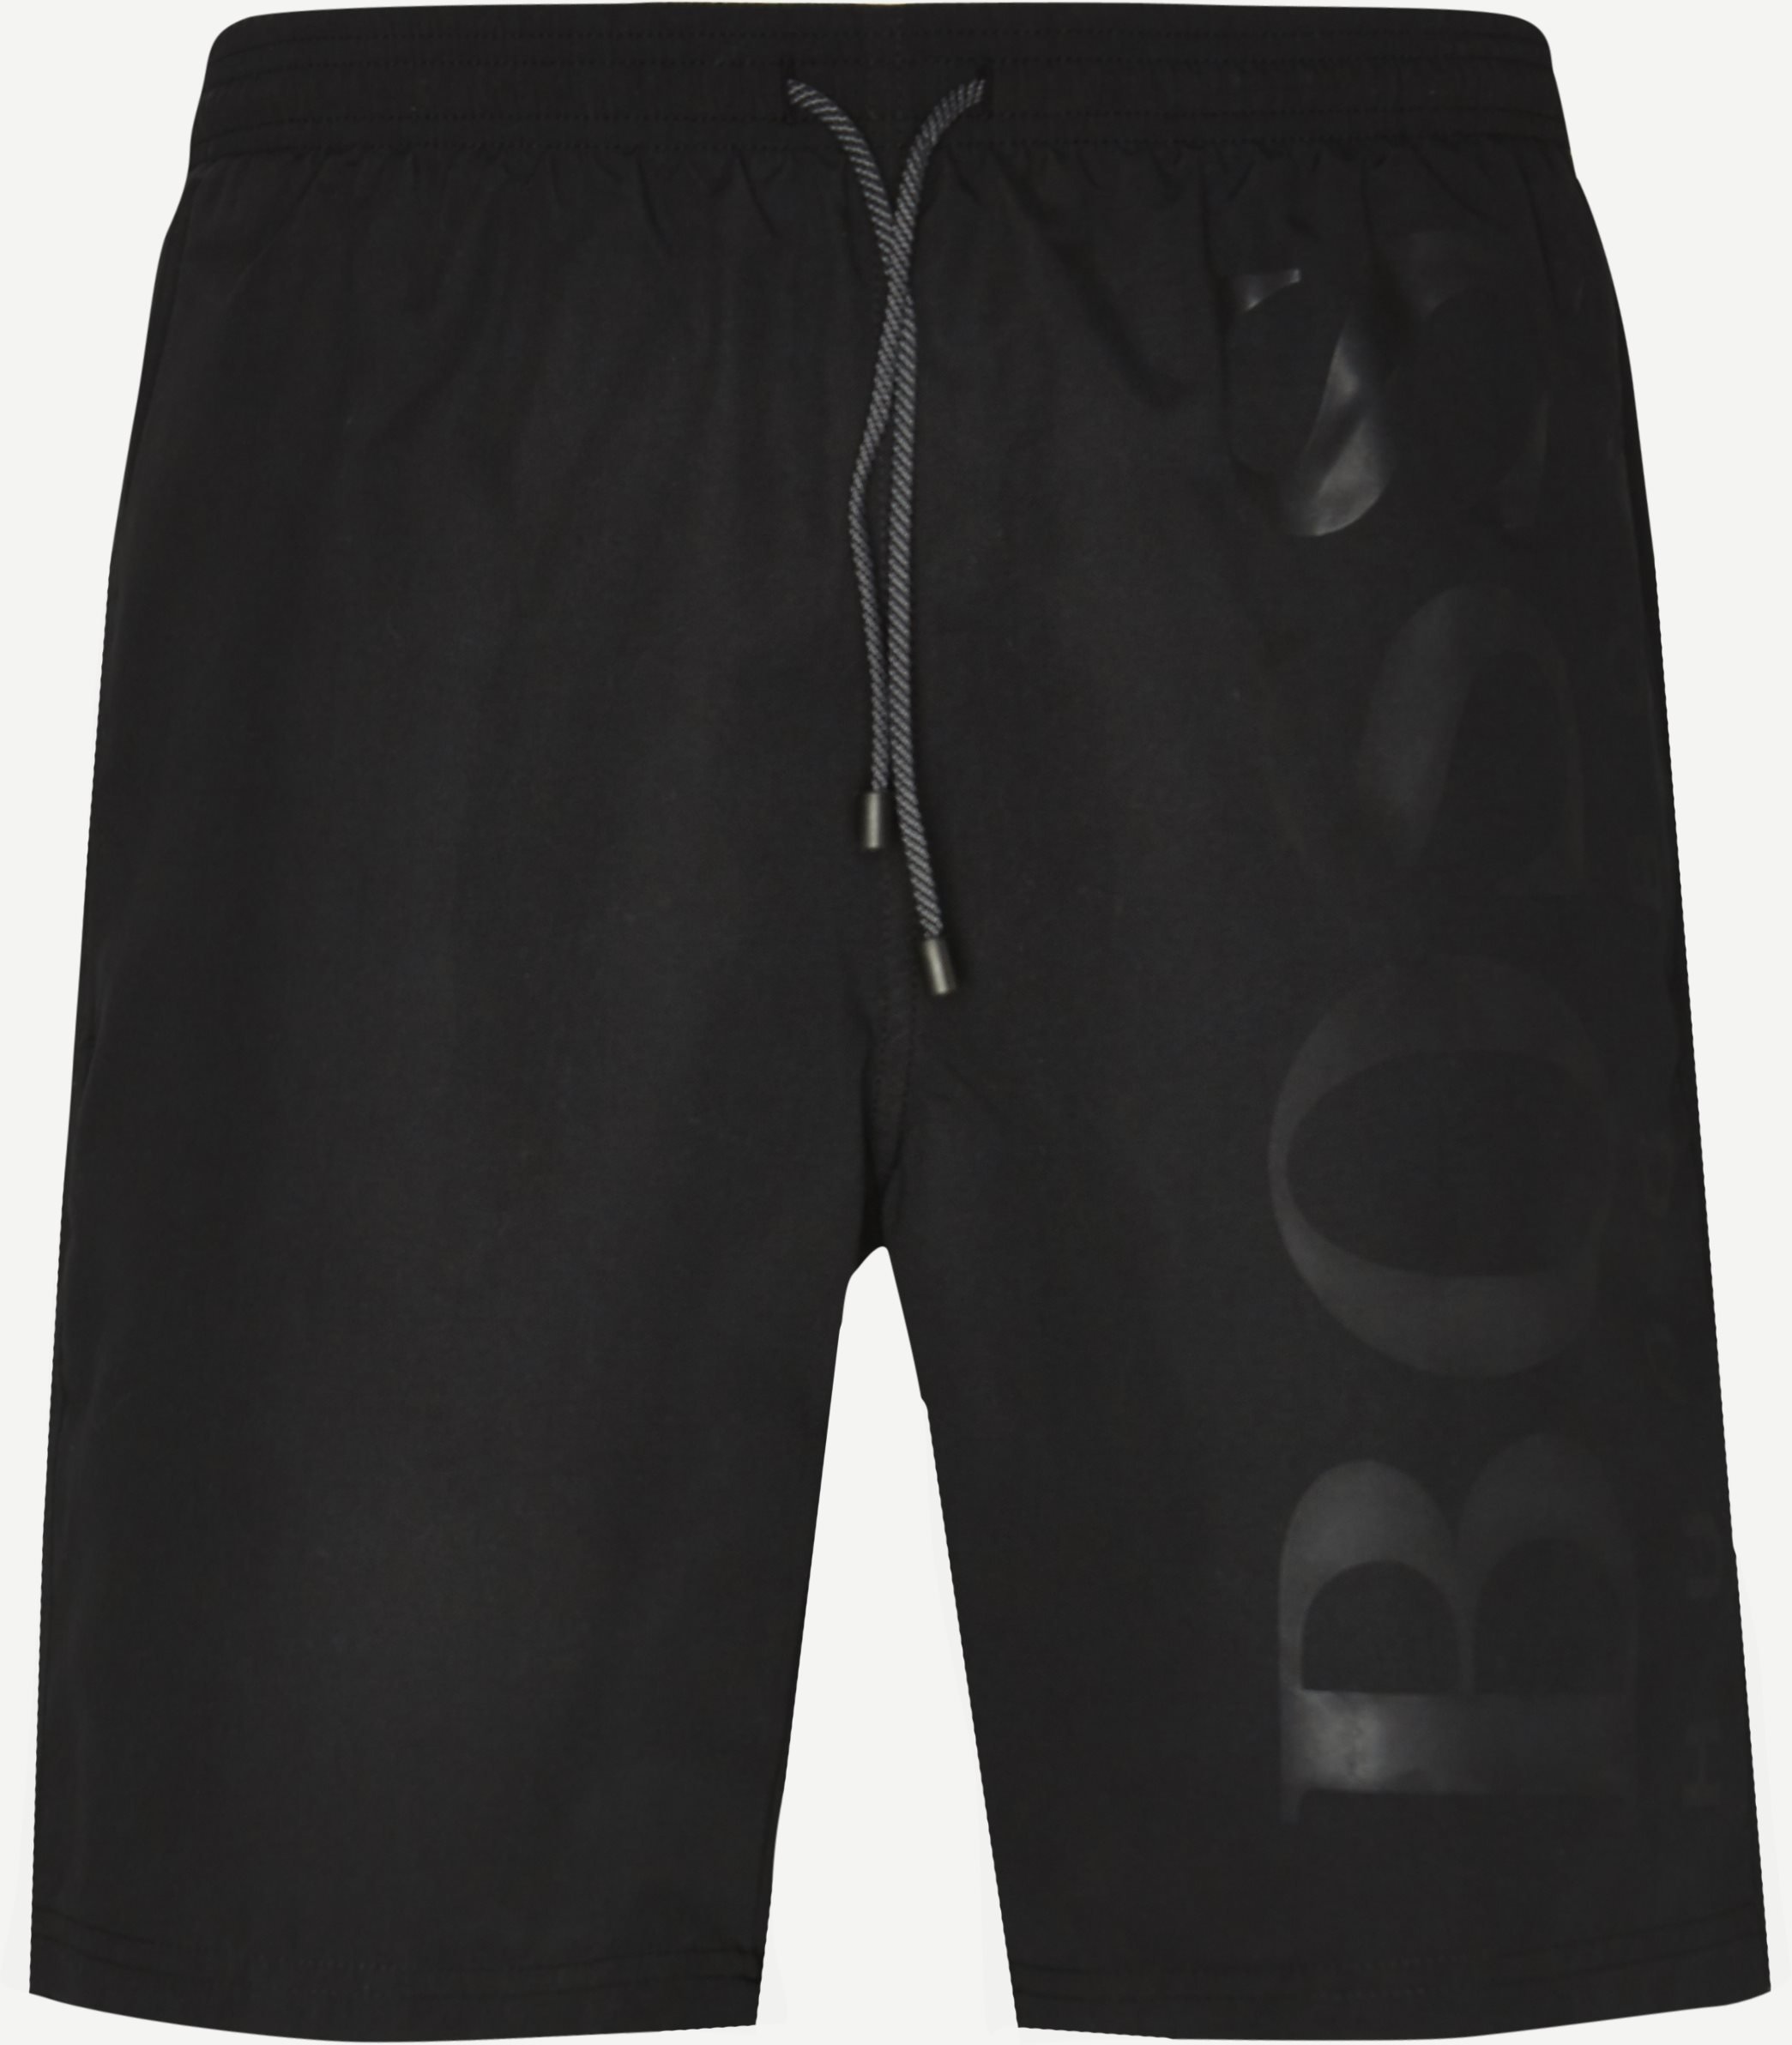 Orca Swim Shorts - Shorts - Regular fit - Black